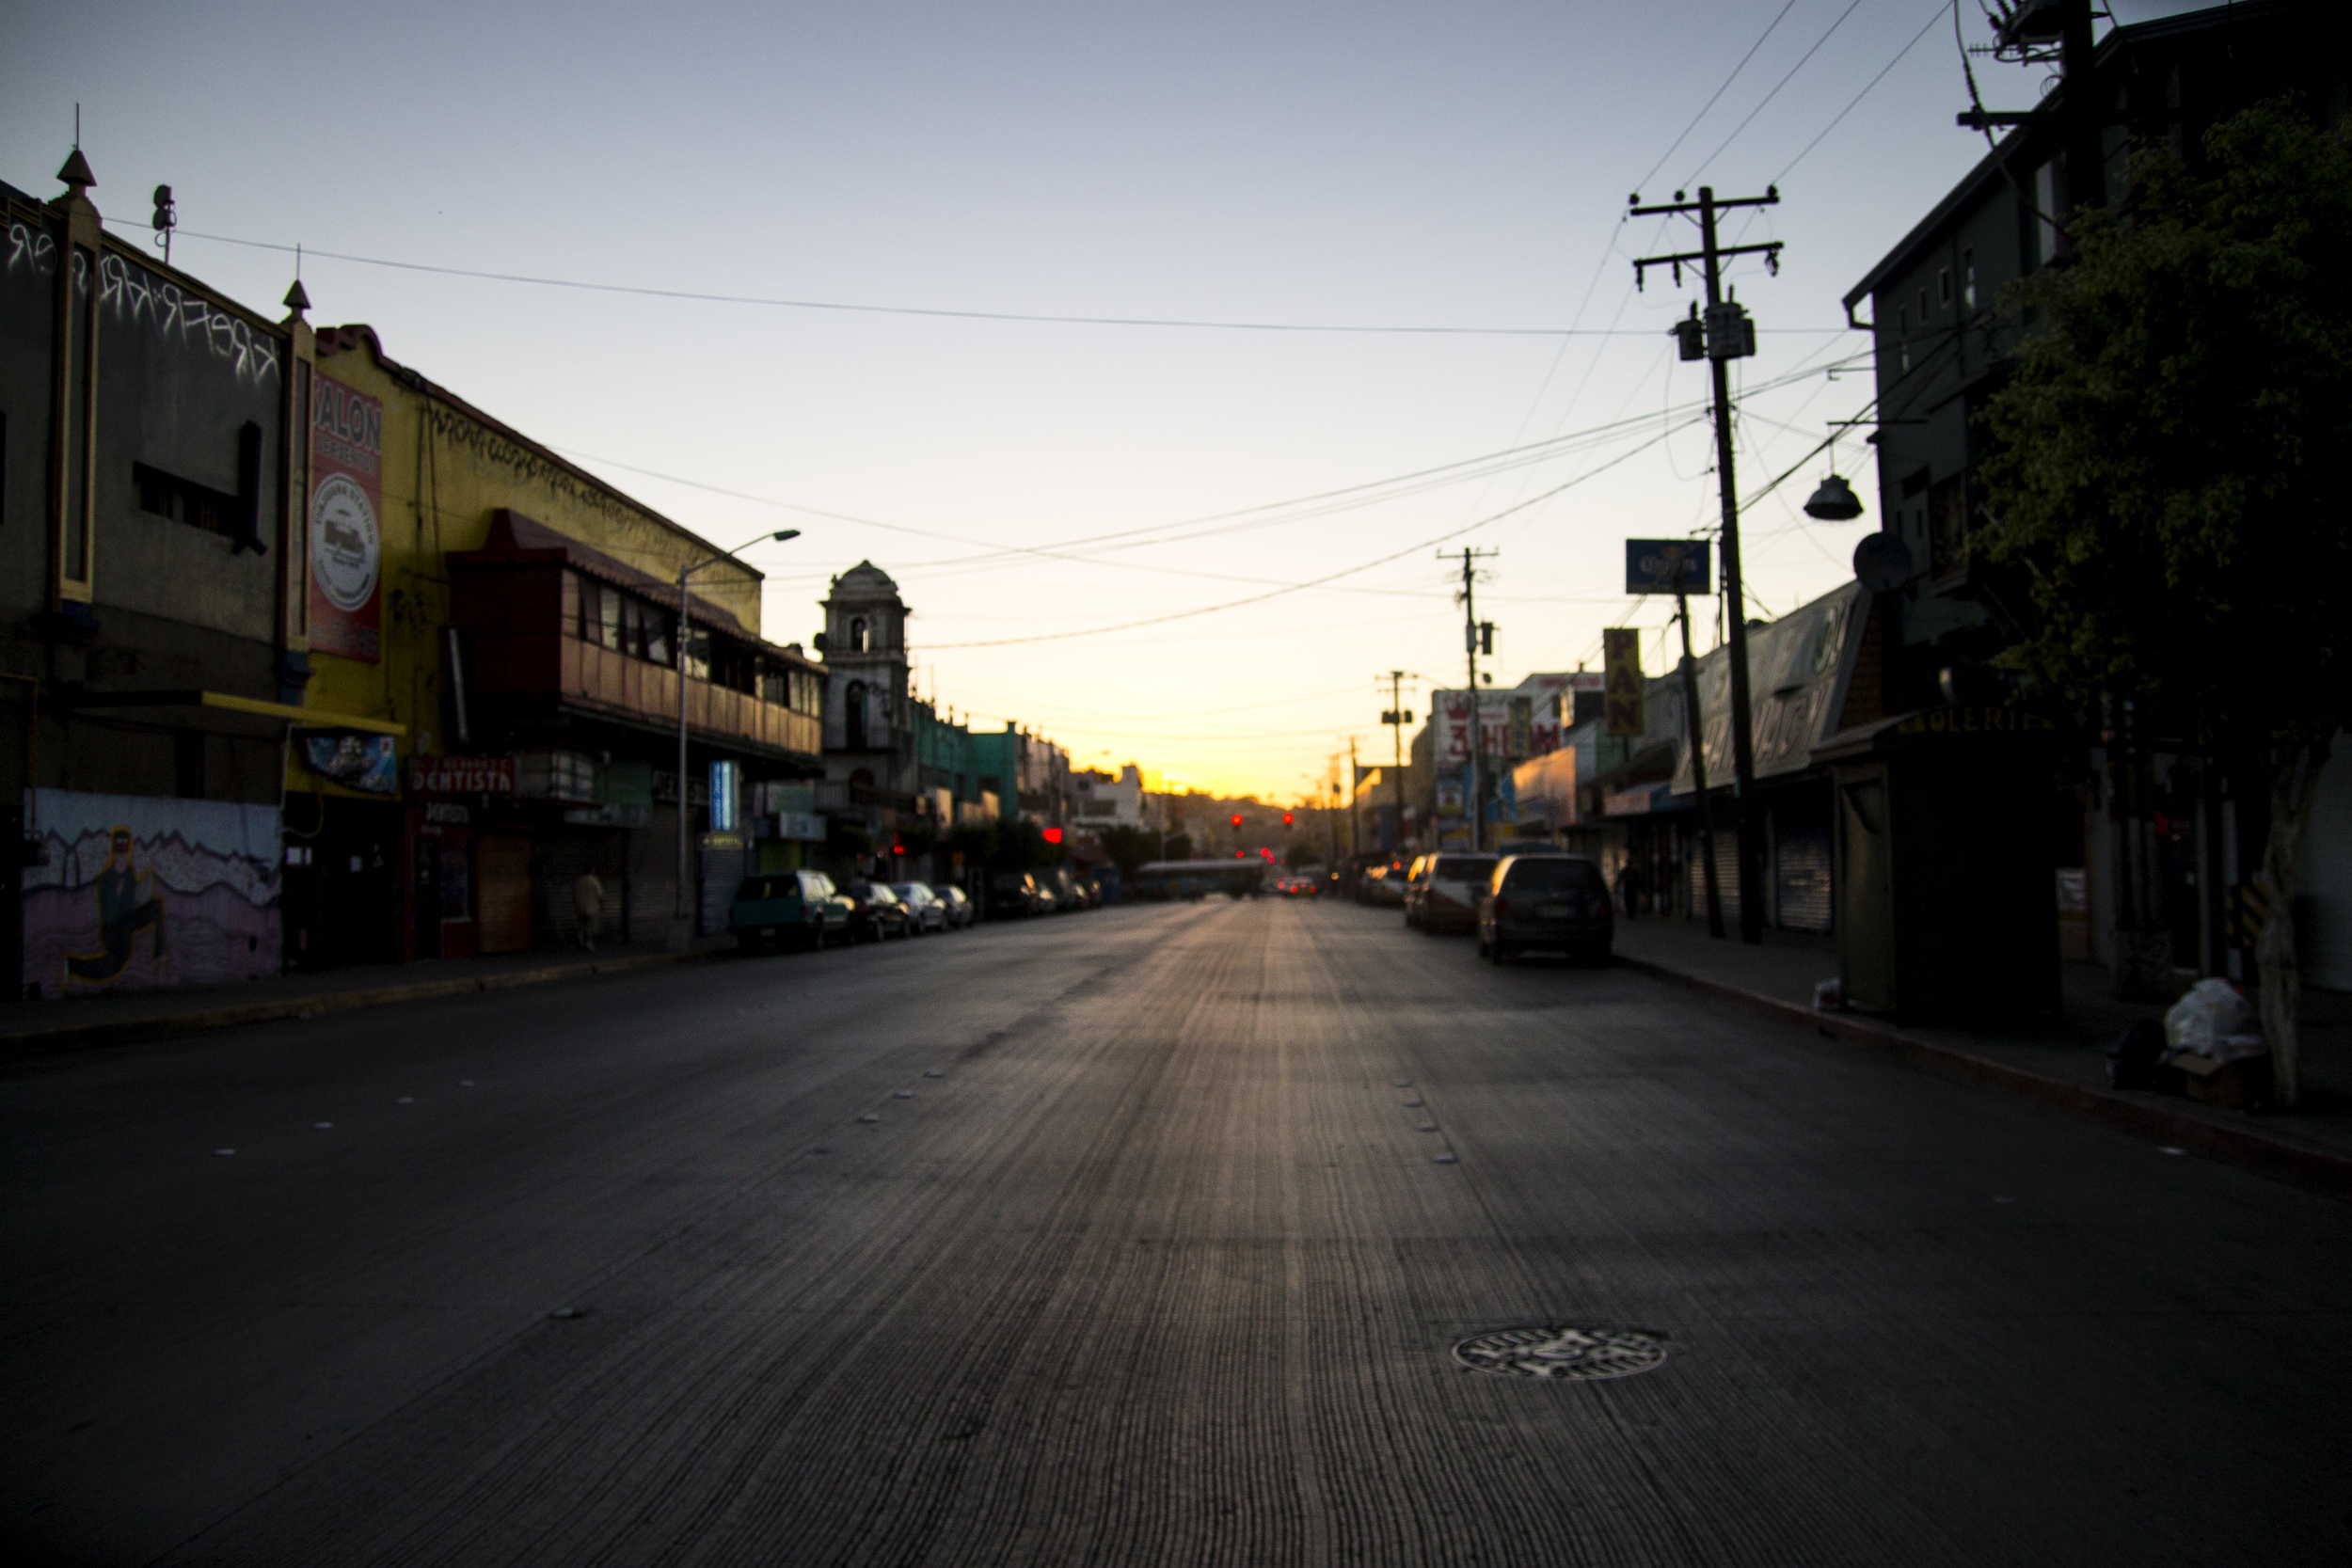  A street in Tijuana​ 